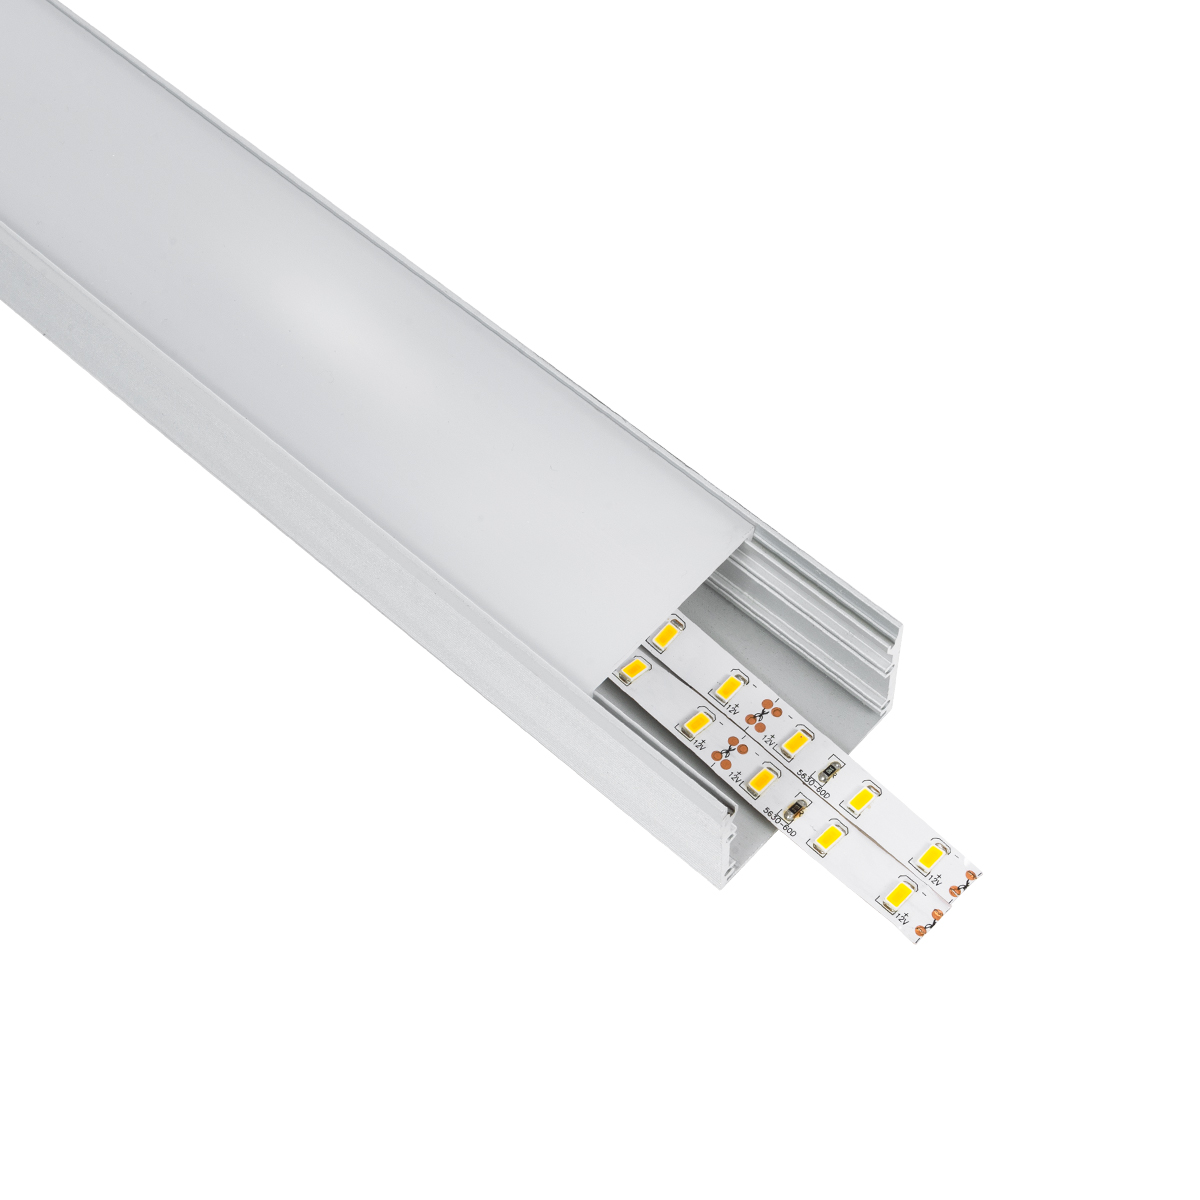 GloboStar® UNDERGROUND-PROFILE 70860-3M Προφίλ Αλουμινίου – Βάση & Ψύκτρα Ταινίας LED με Λευκό Γαλακτερό Κάλυμμα – Ενδοδαπέδια Χωνευτή Χρήση σε Δρόμους – Πατητό Κάλυμμα Υψηλής Αντοχής & Ανθεκτικότητας σε Βάρος – Ασημί – 3 Μέτρα – Μ300 x Π5 x Υ3.5cm